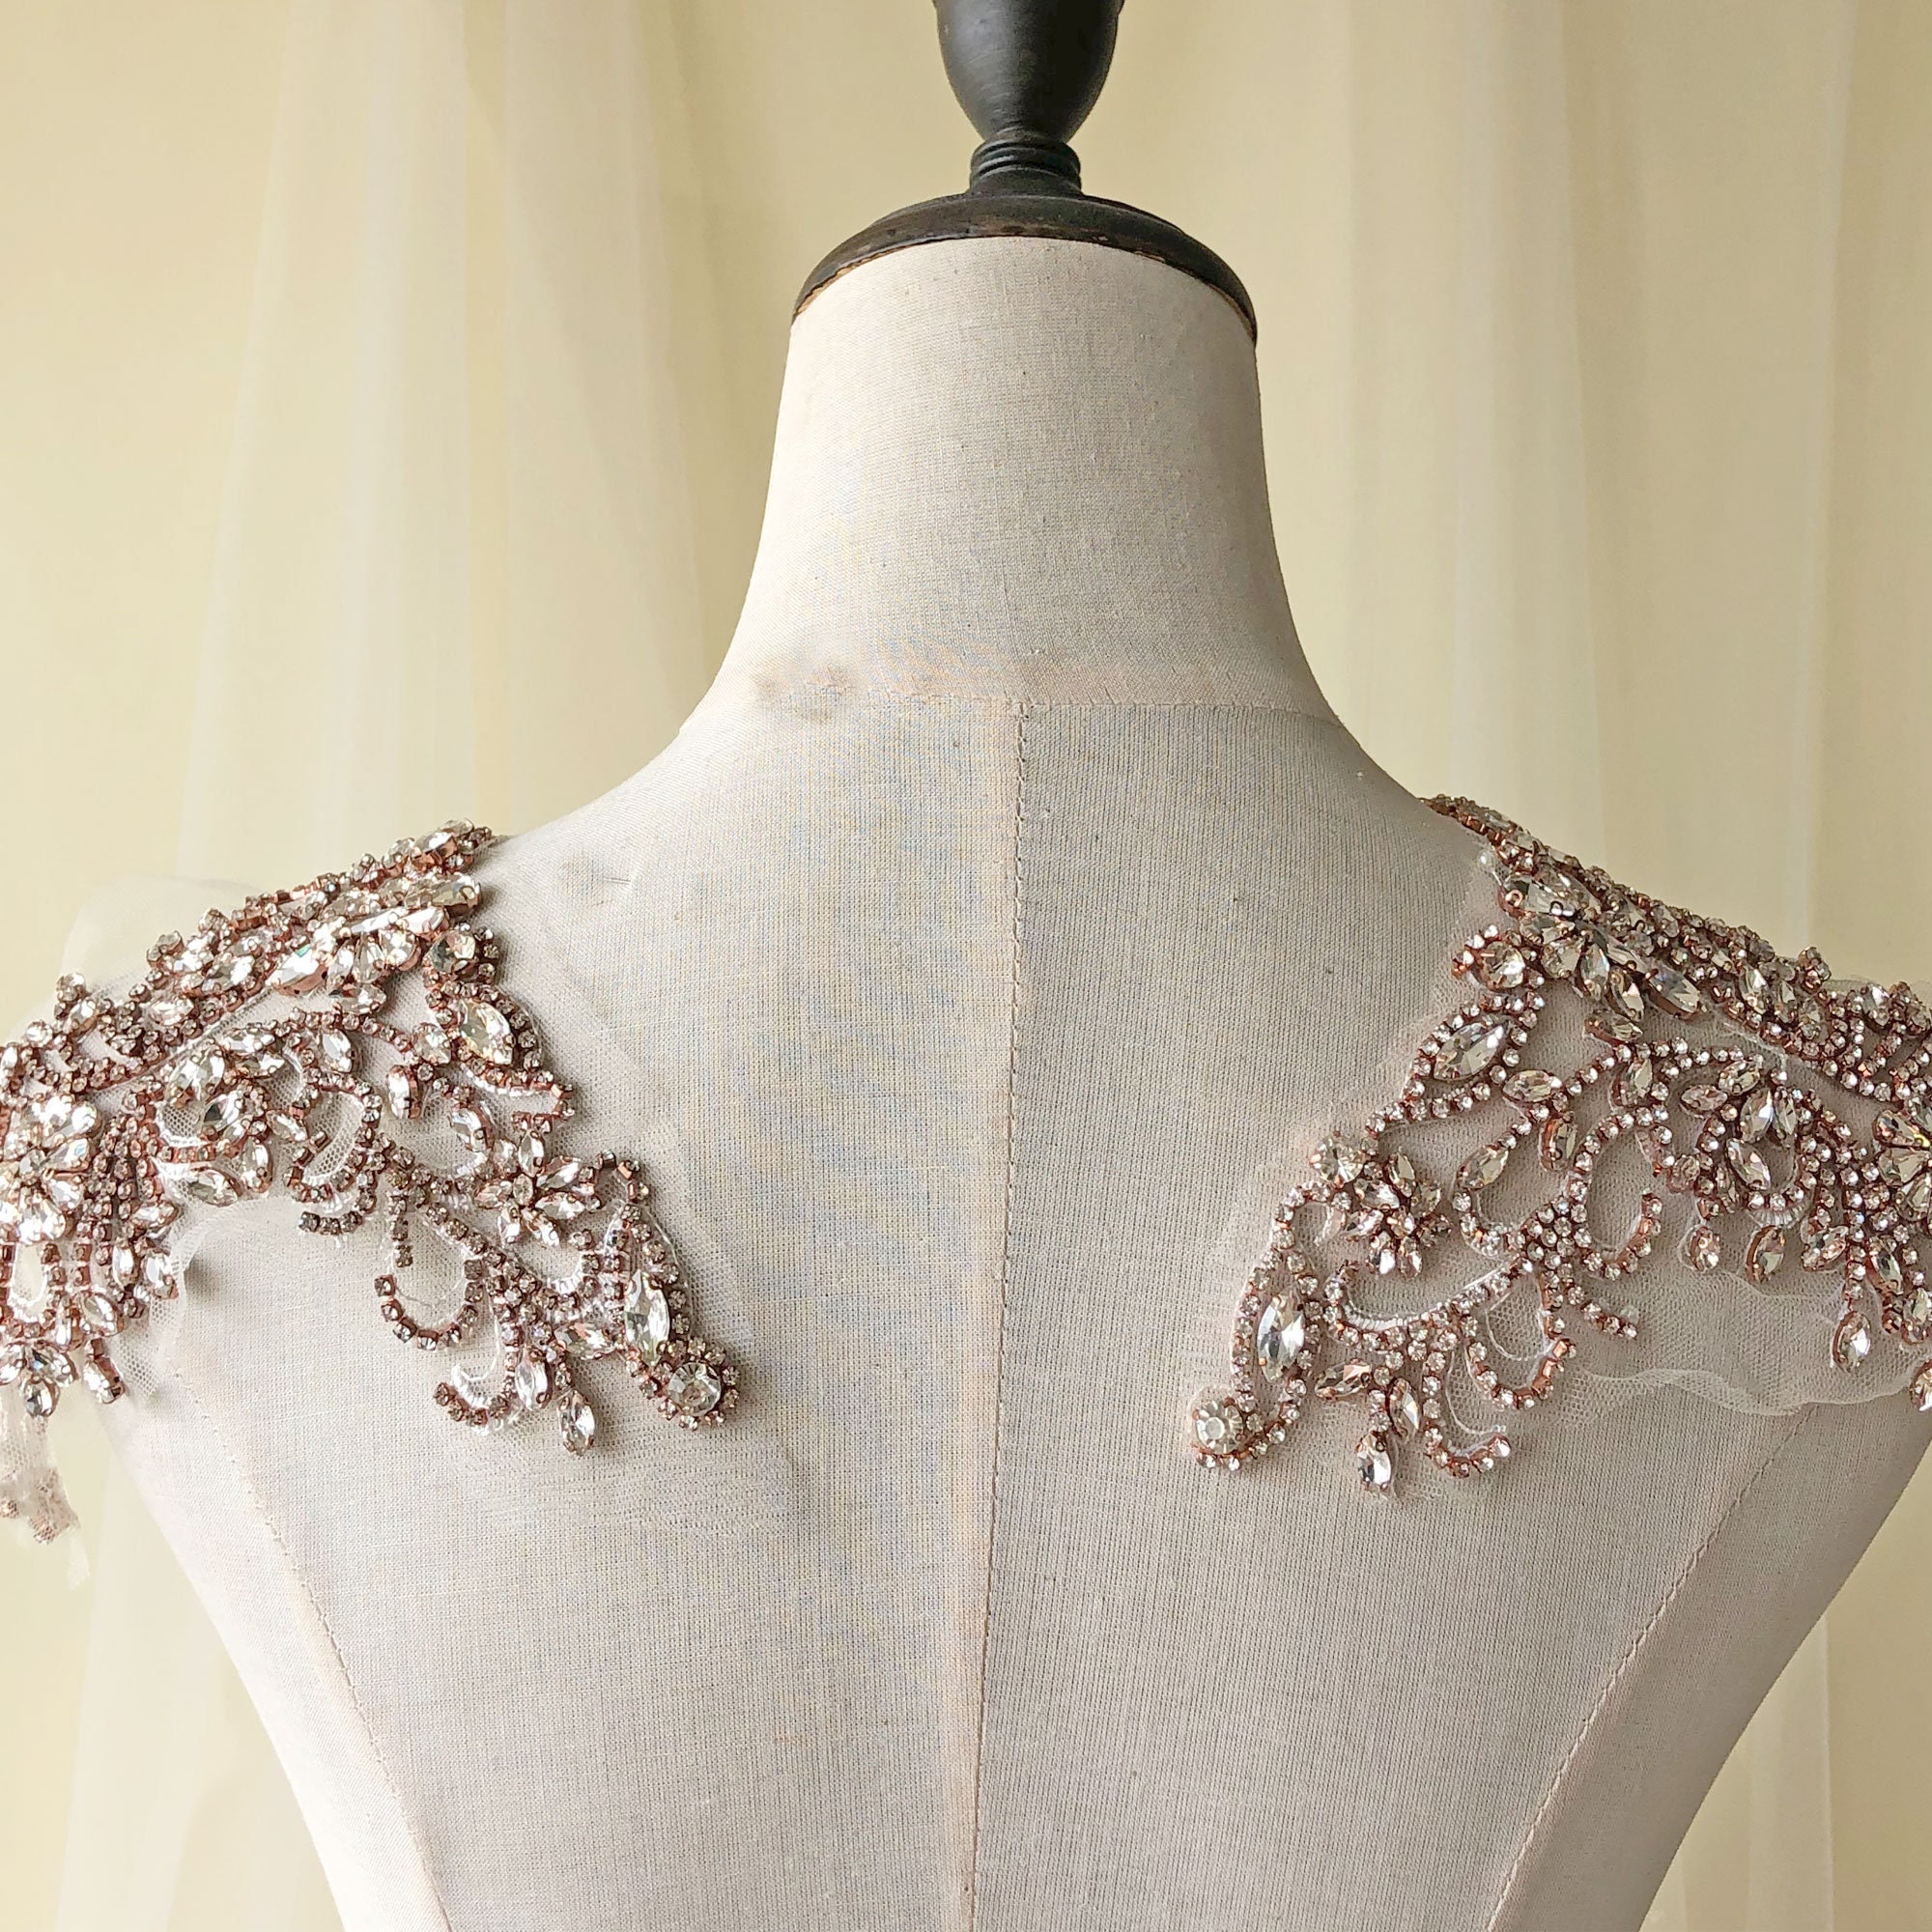 DUOBAO Rhinestone Pearl Bead Applique Iridescent Rhinestone Appliques for Dresses Vintage Crystal Bridal Sash Wedding Dress Belt